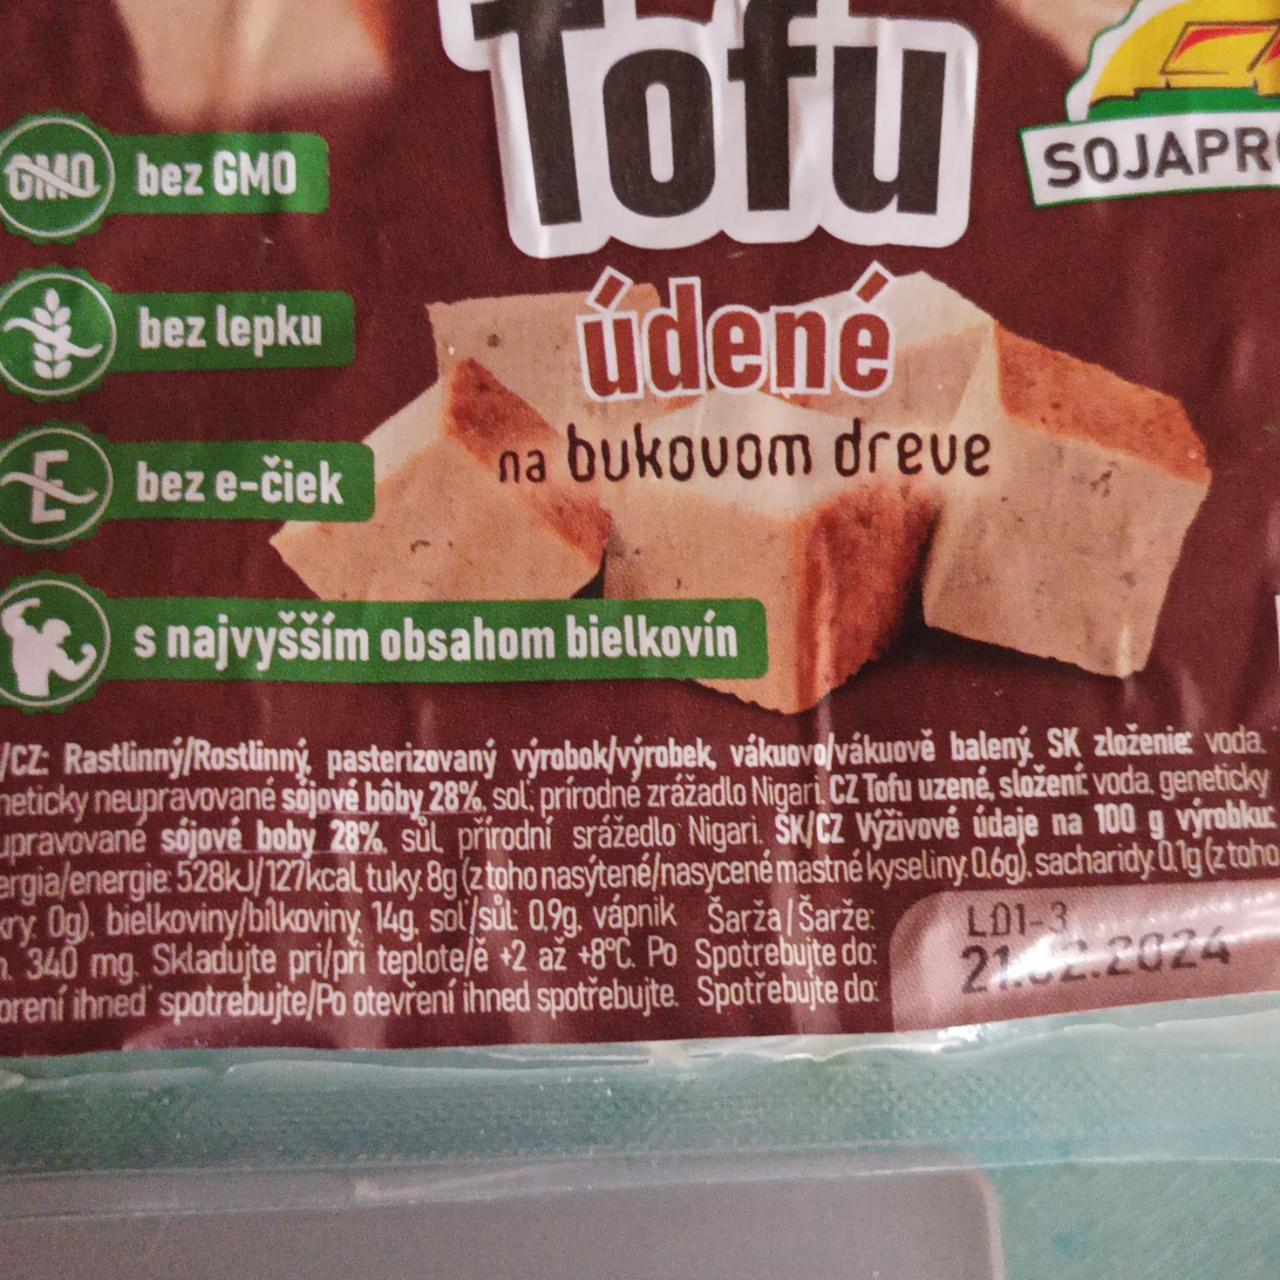 Фото - Тофу - соєвий продукт Sojaprodukt